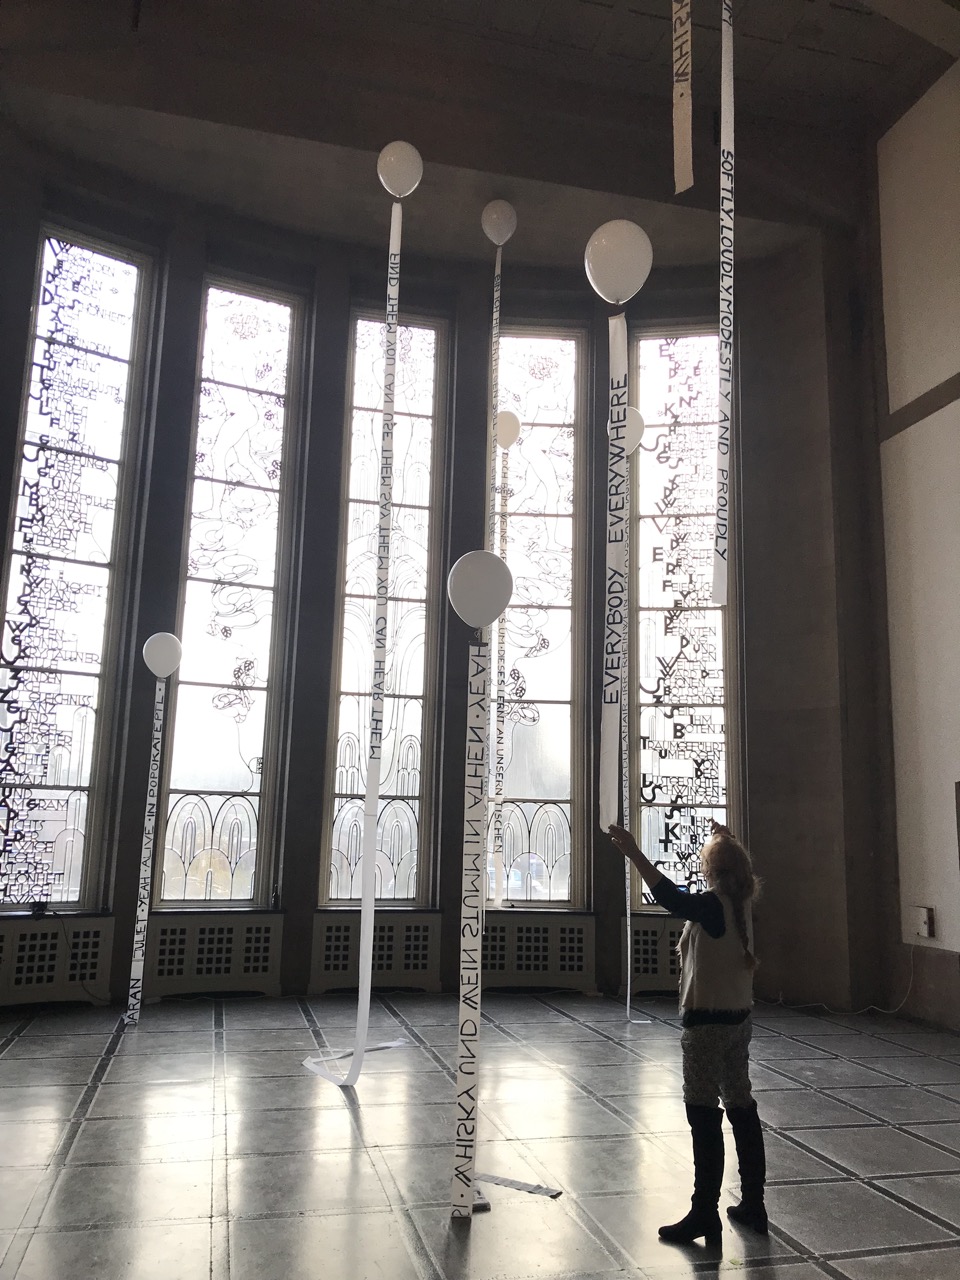 Heliumballons tragen Texte im Raum